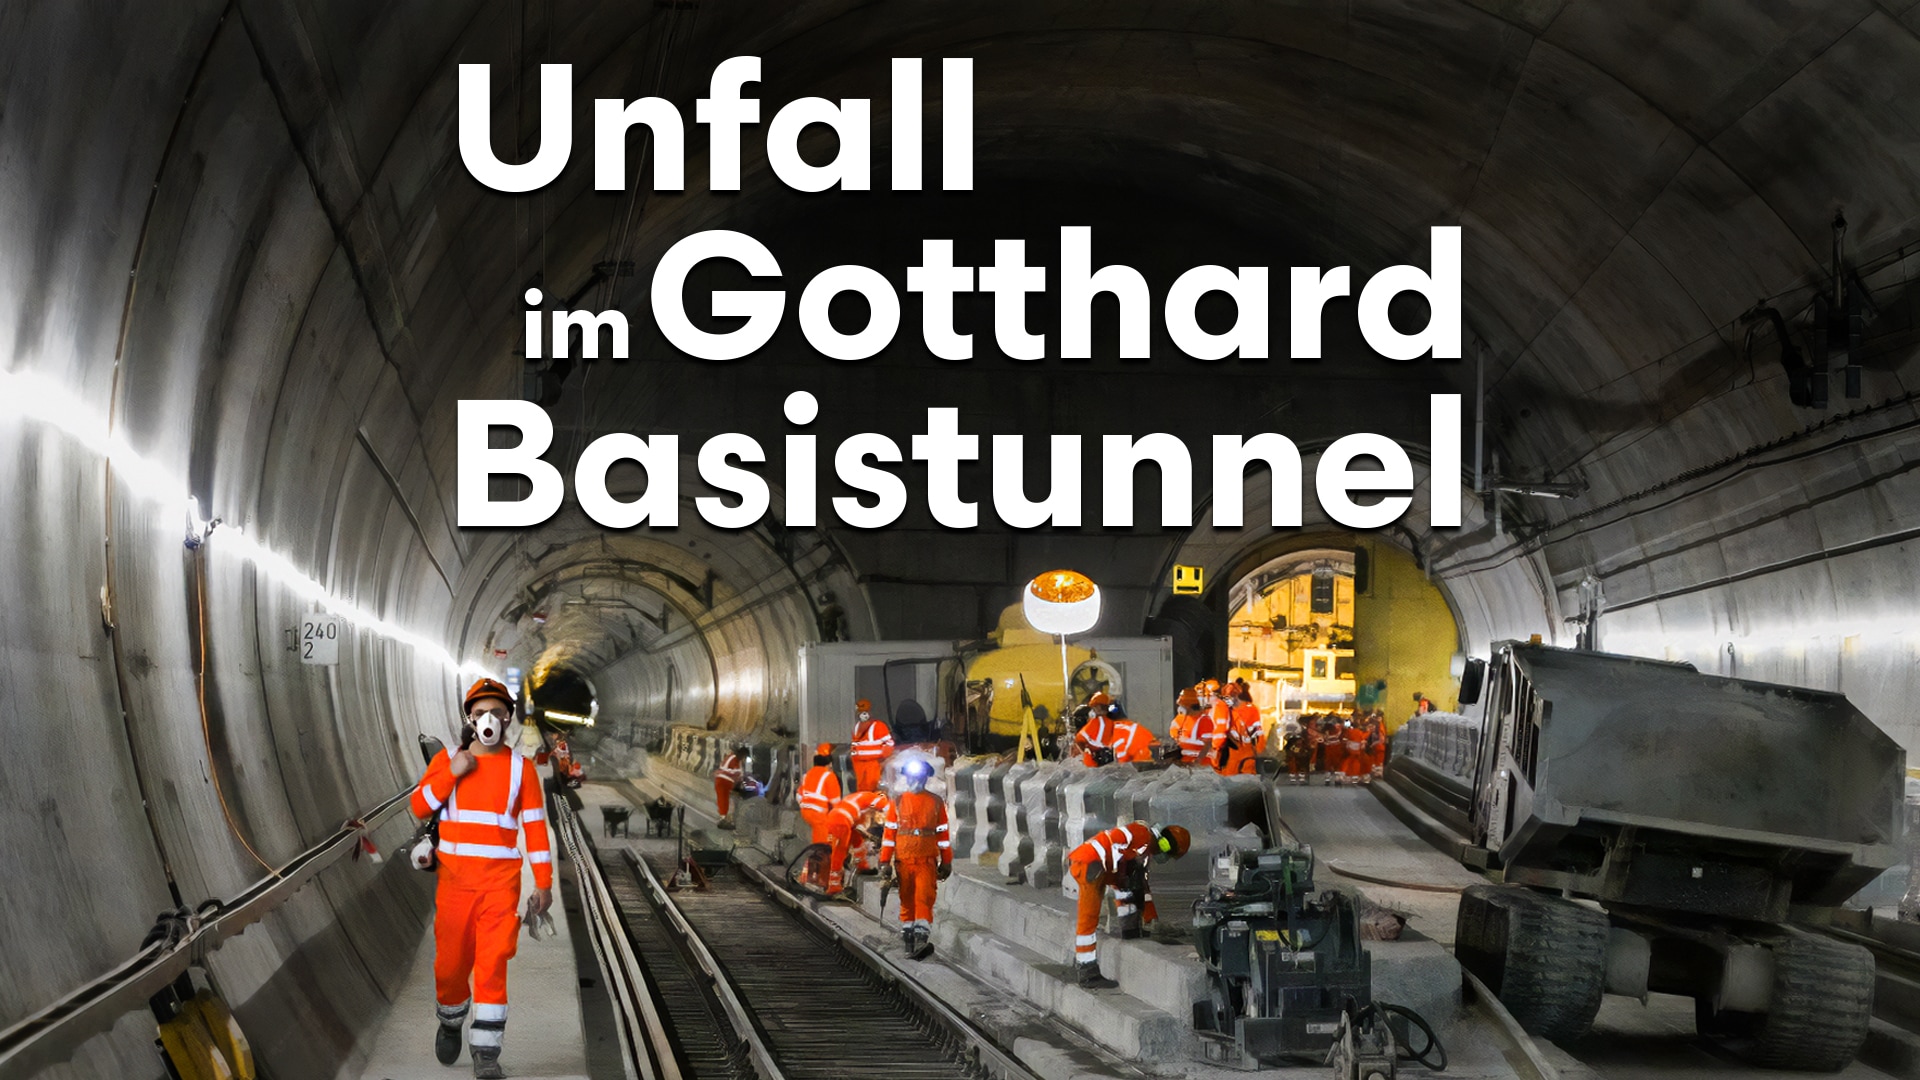 Unfall im Gotthard Basistunnel